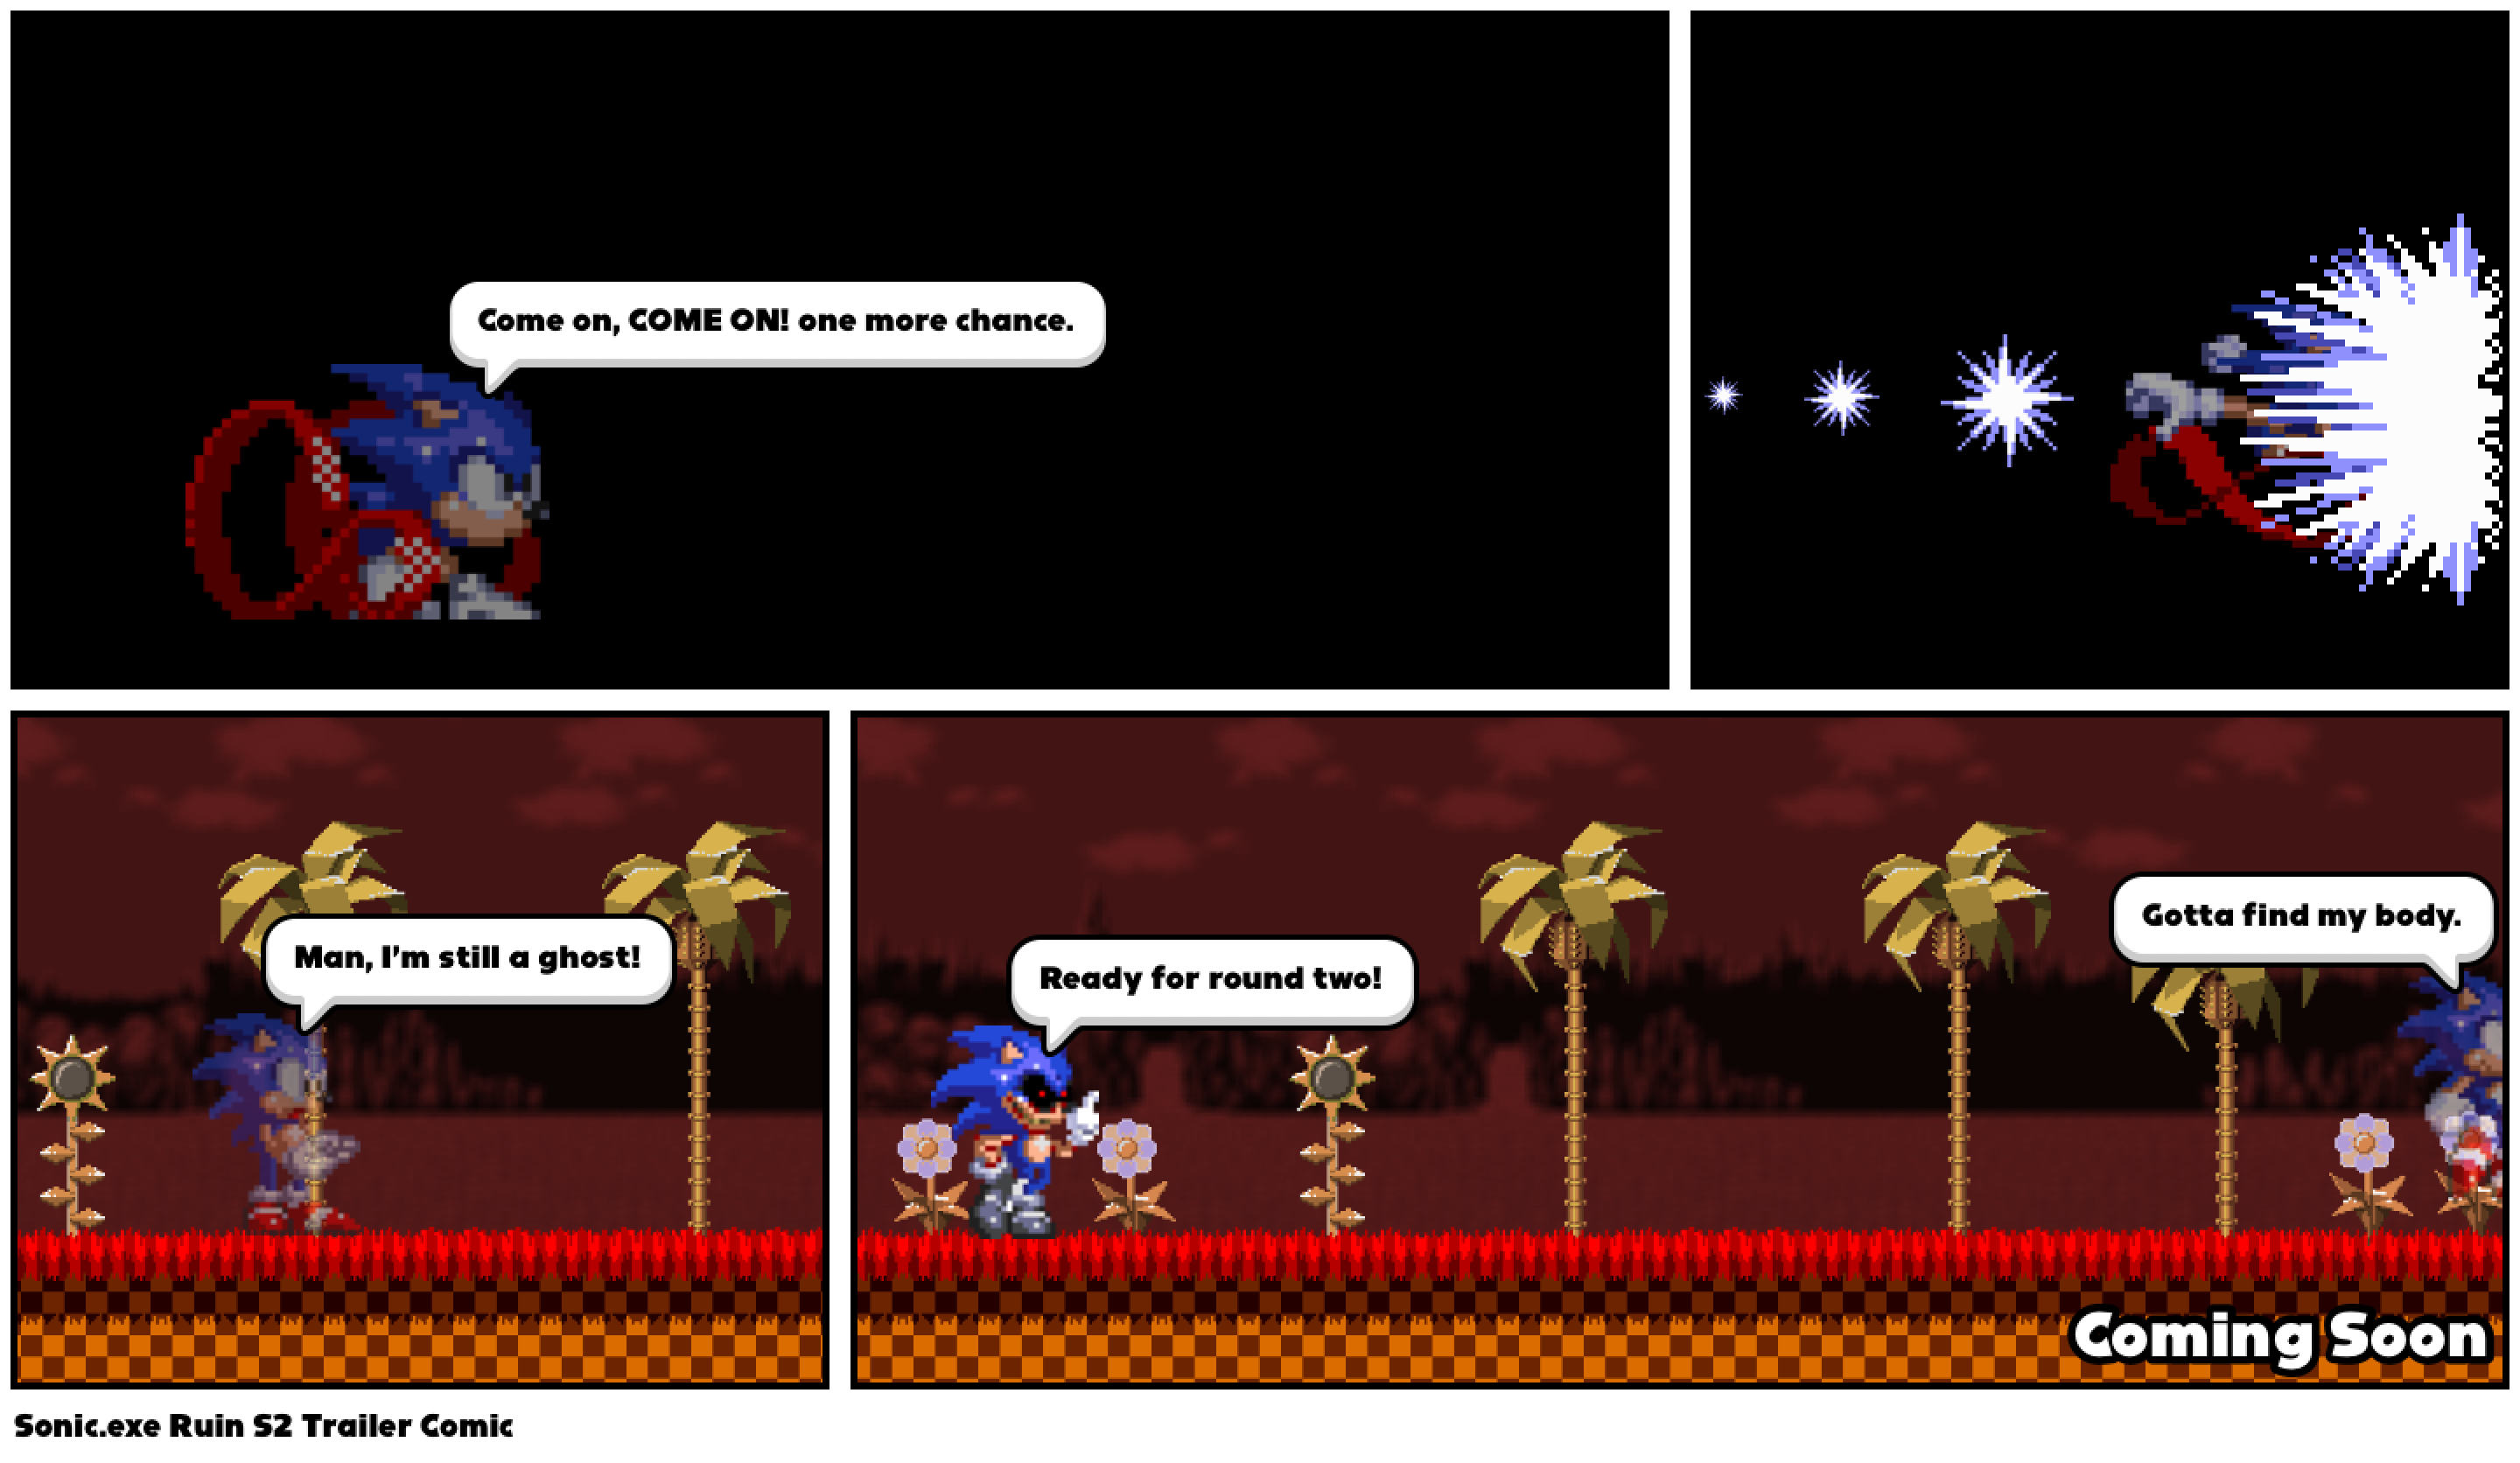 Sonic.exe Ruin S2 Trailer Comic